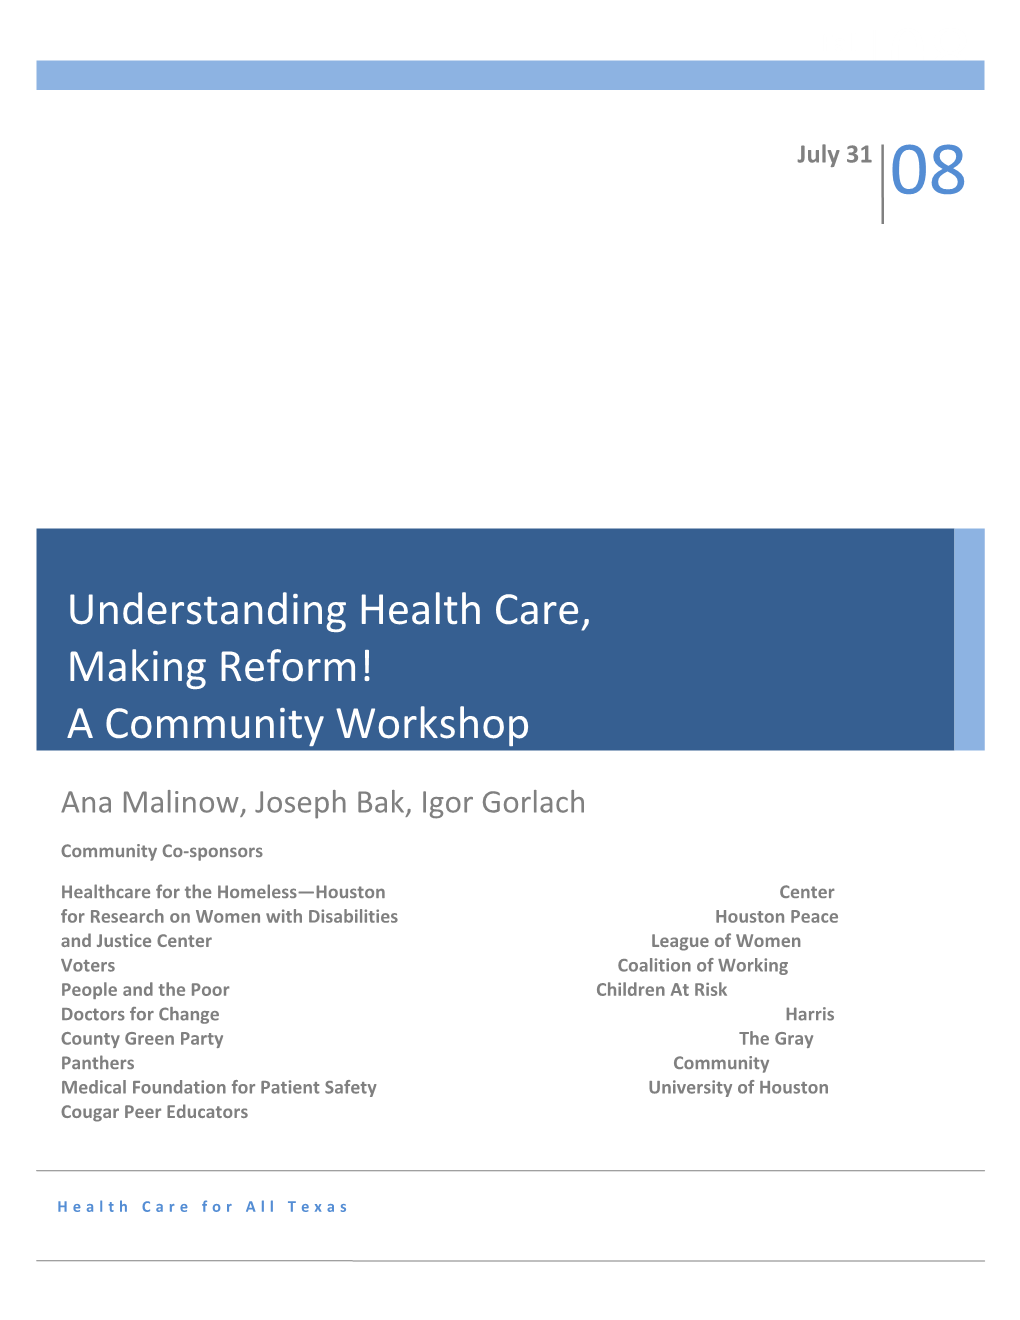 Understanding Health Care, Making Reform! a Community Workshop